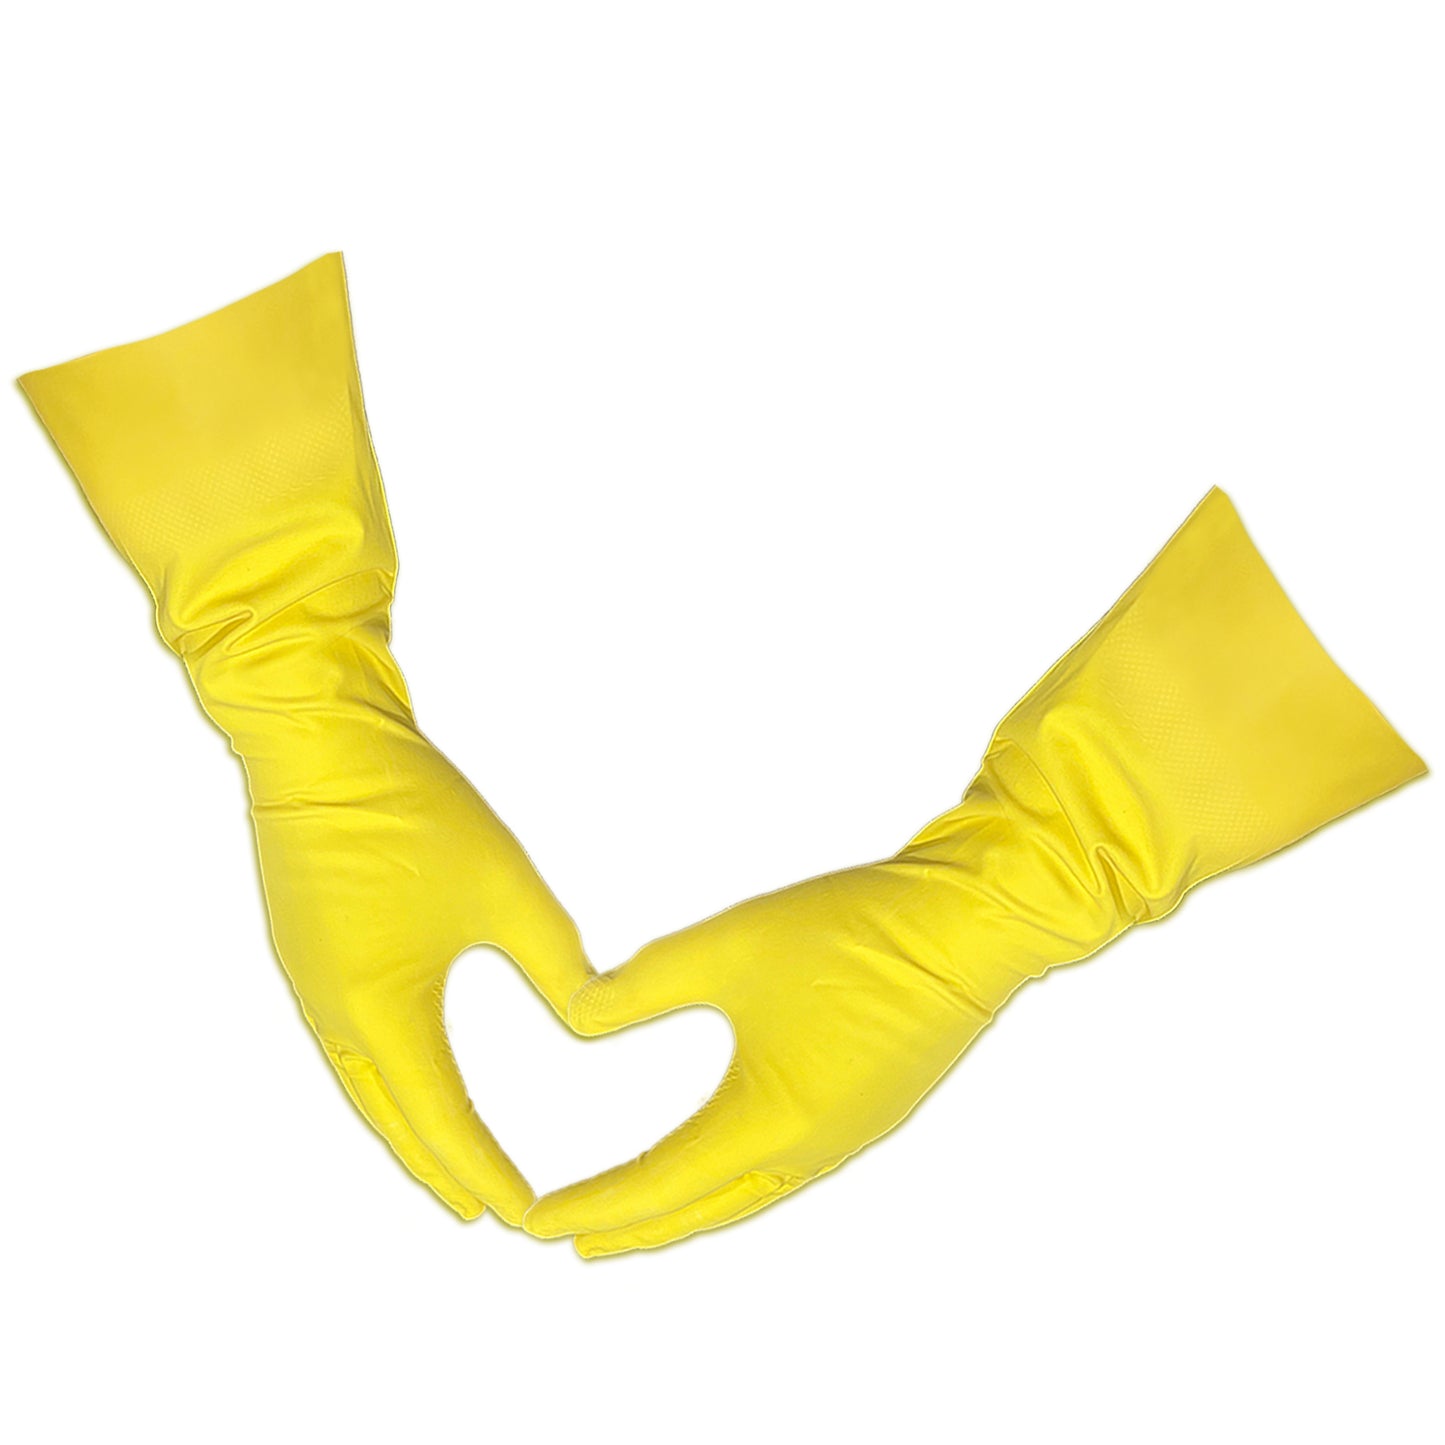 Size Medium - 3 Pairs (6 Gloves) Gloves Legend Yellow Household Nitrile Kitchen Cleaning Dishwashing Reusable Gloves - Powder Free